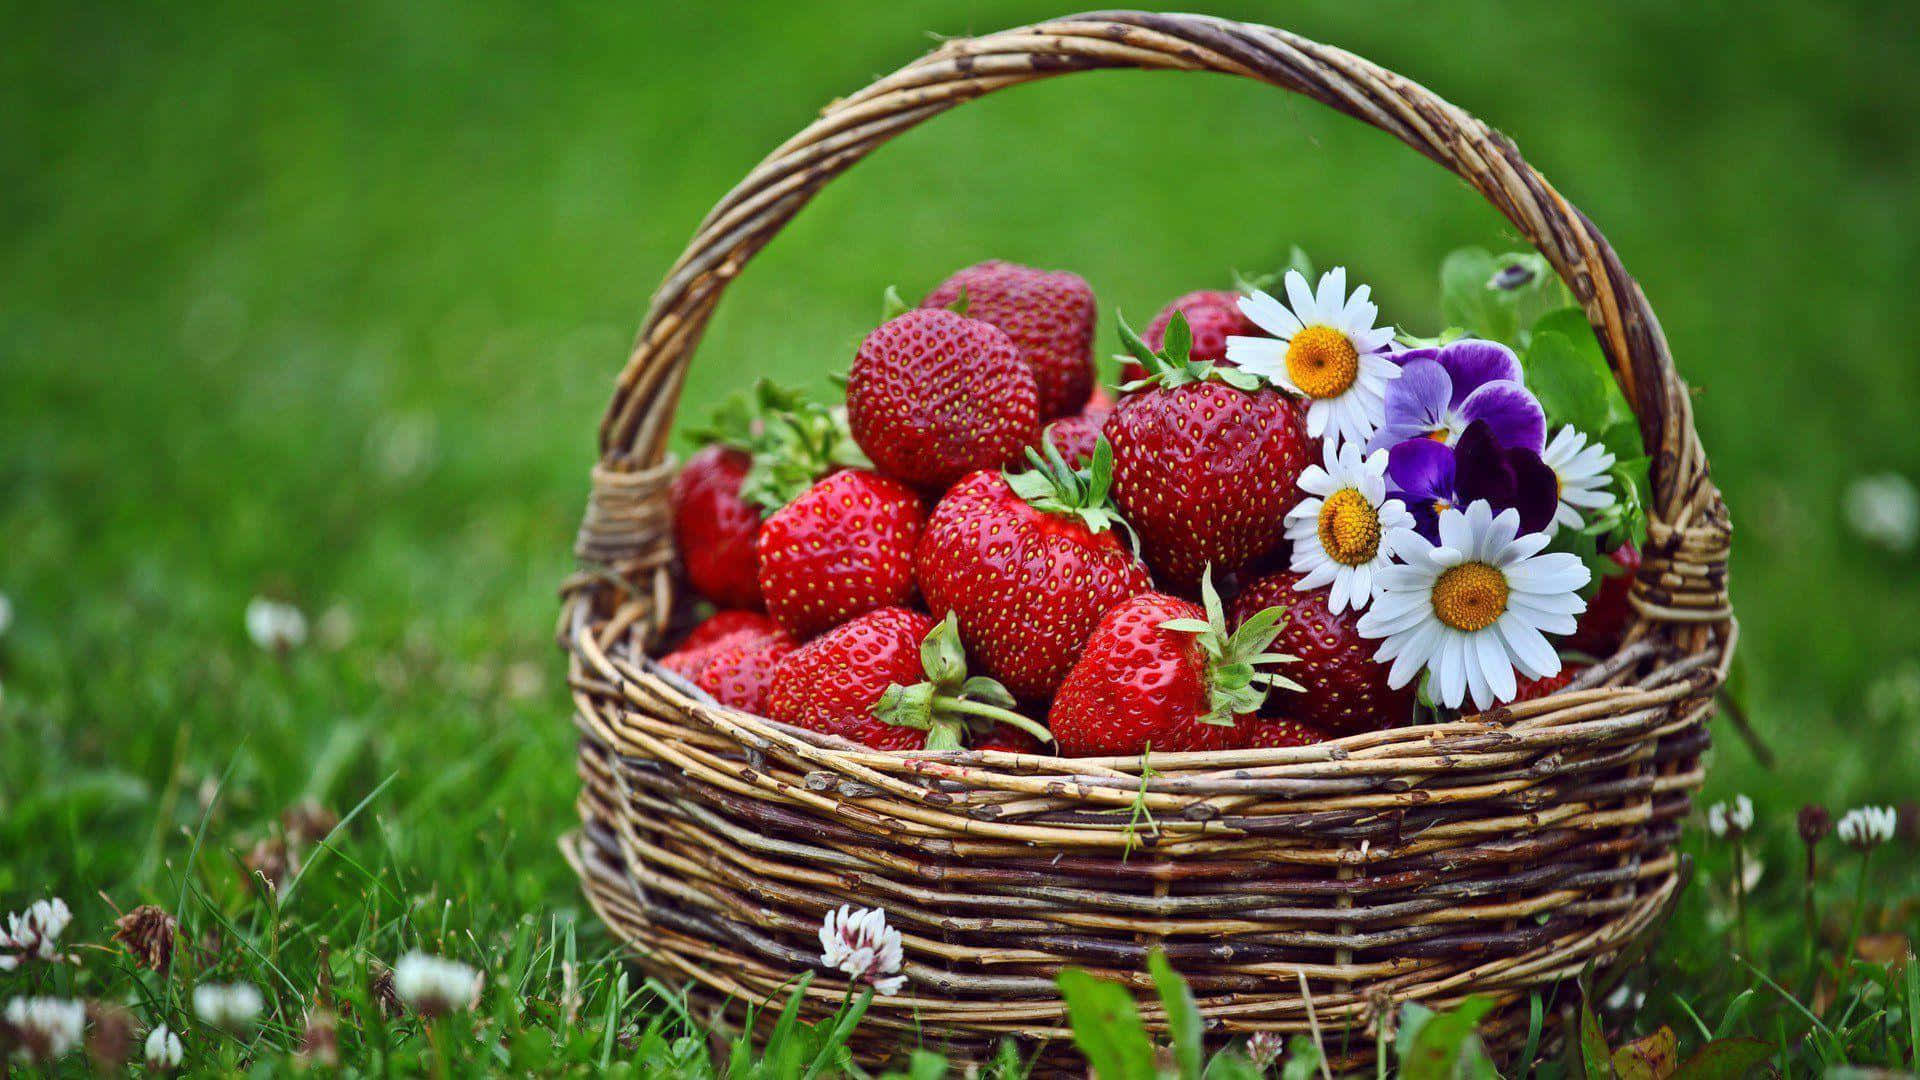 Fresh and juicy Strawberries to enjoy!